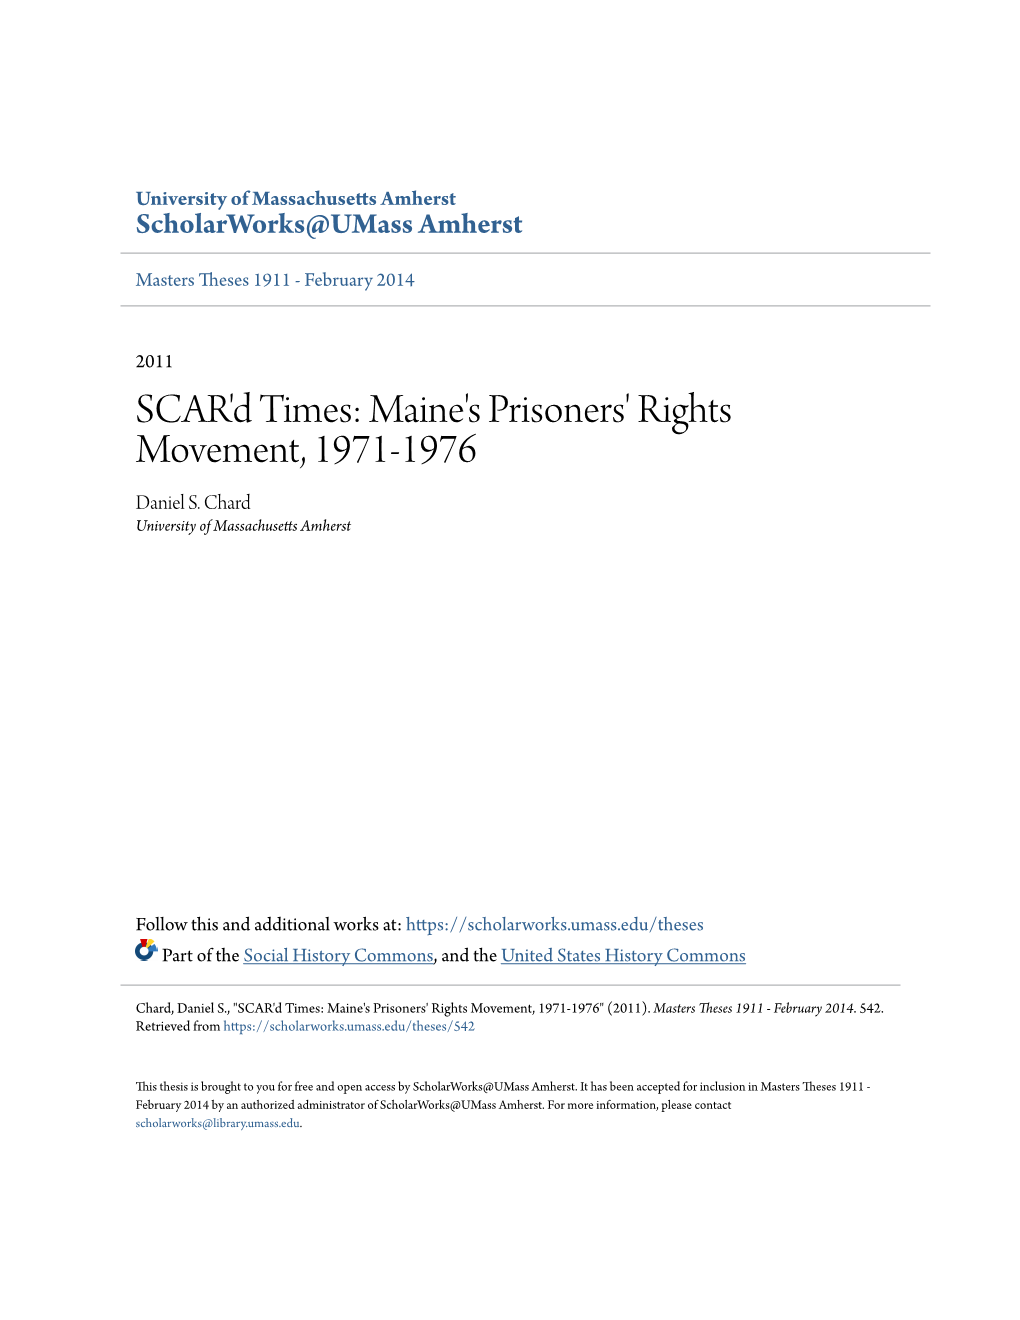 SCAR'd Times: Maine's Prisoners' Rights Movement, 1971-1976 Daniel S